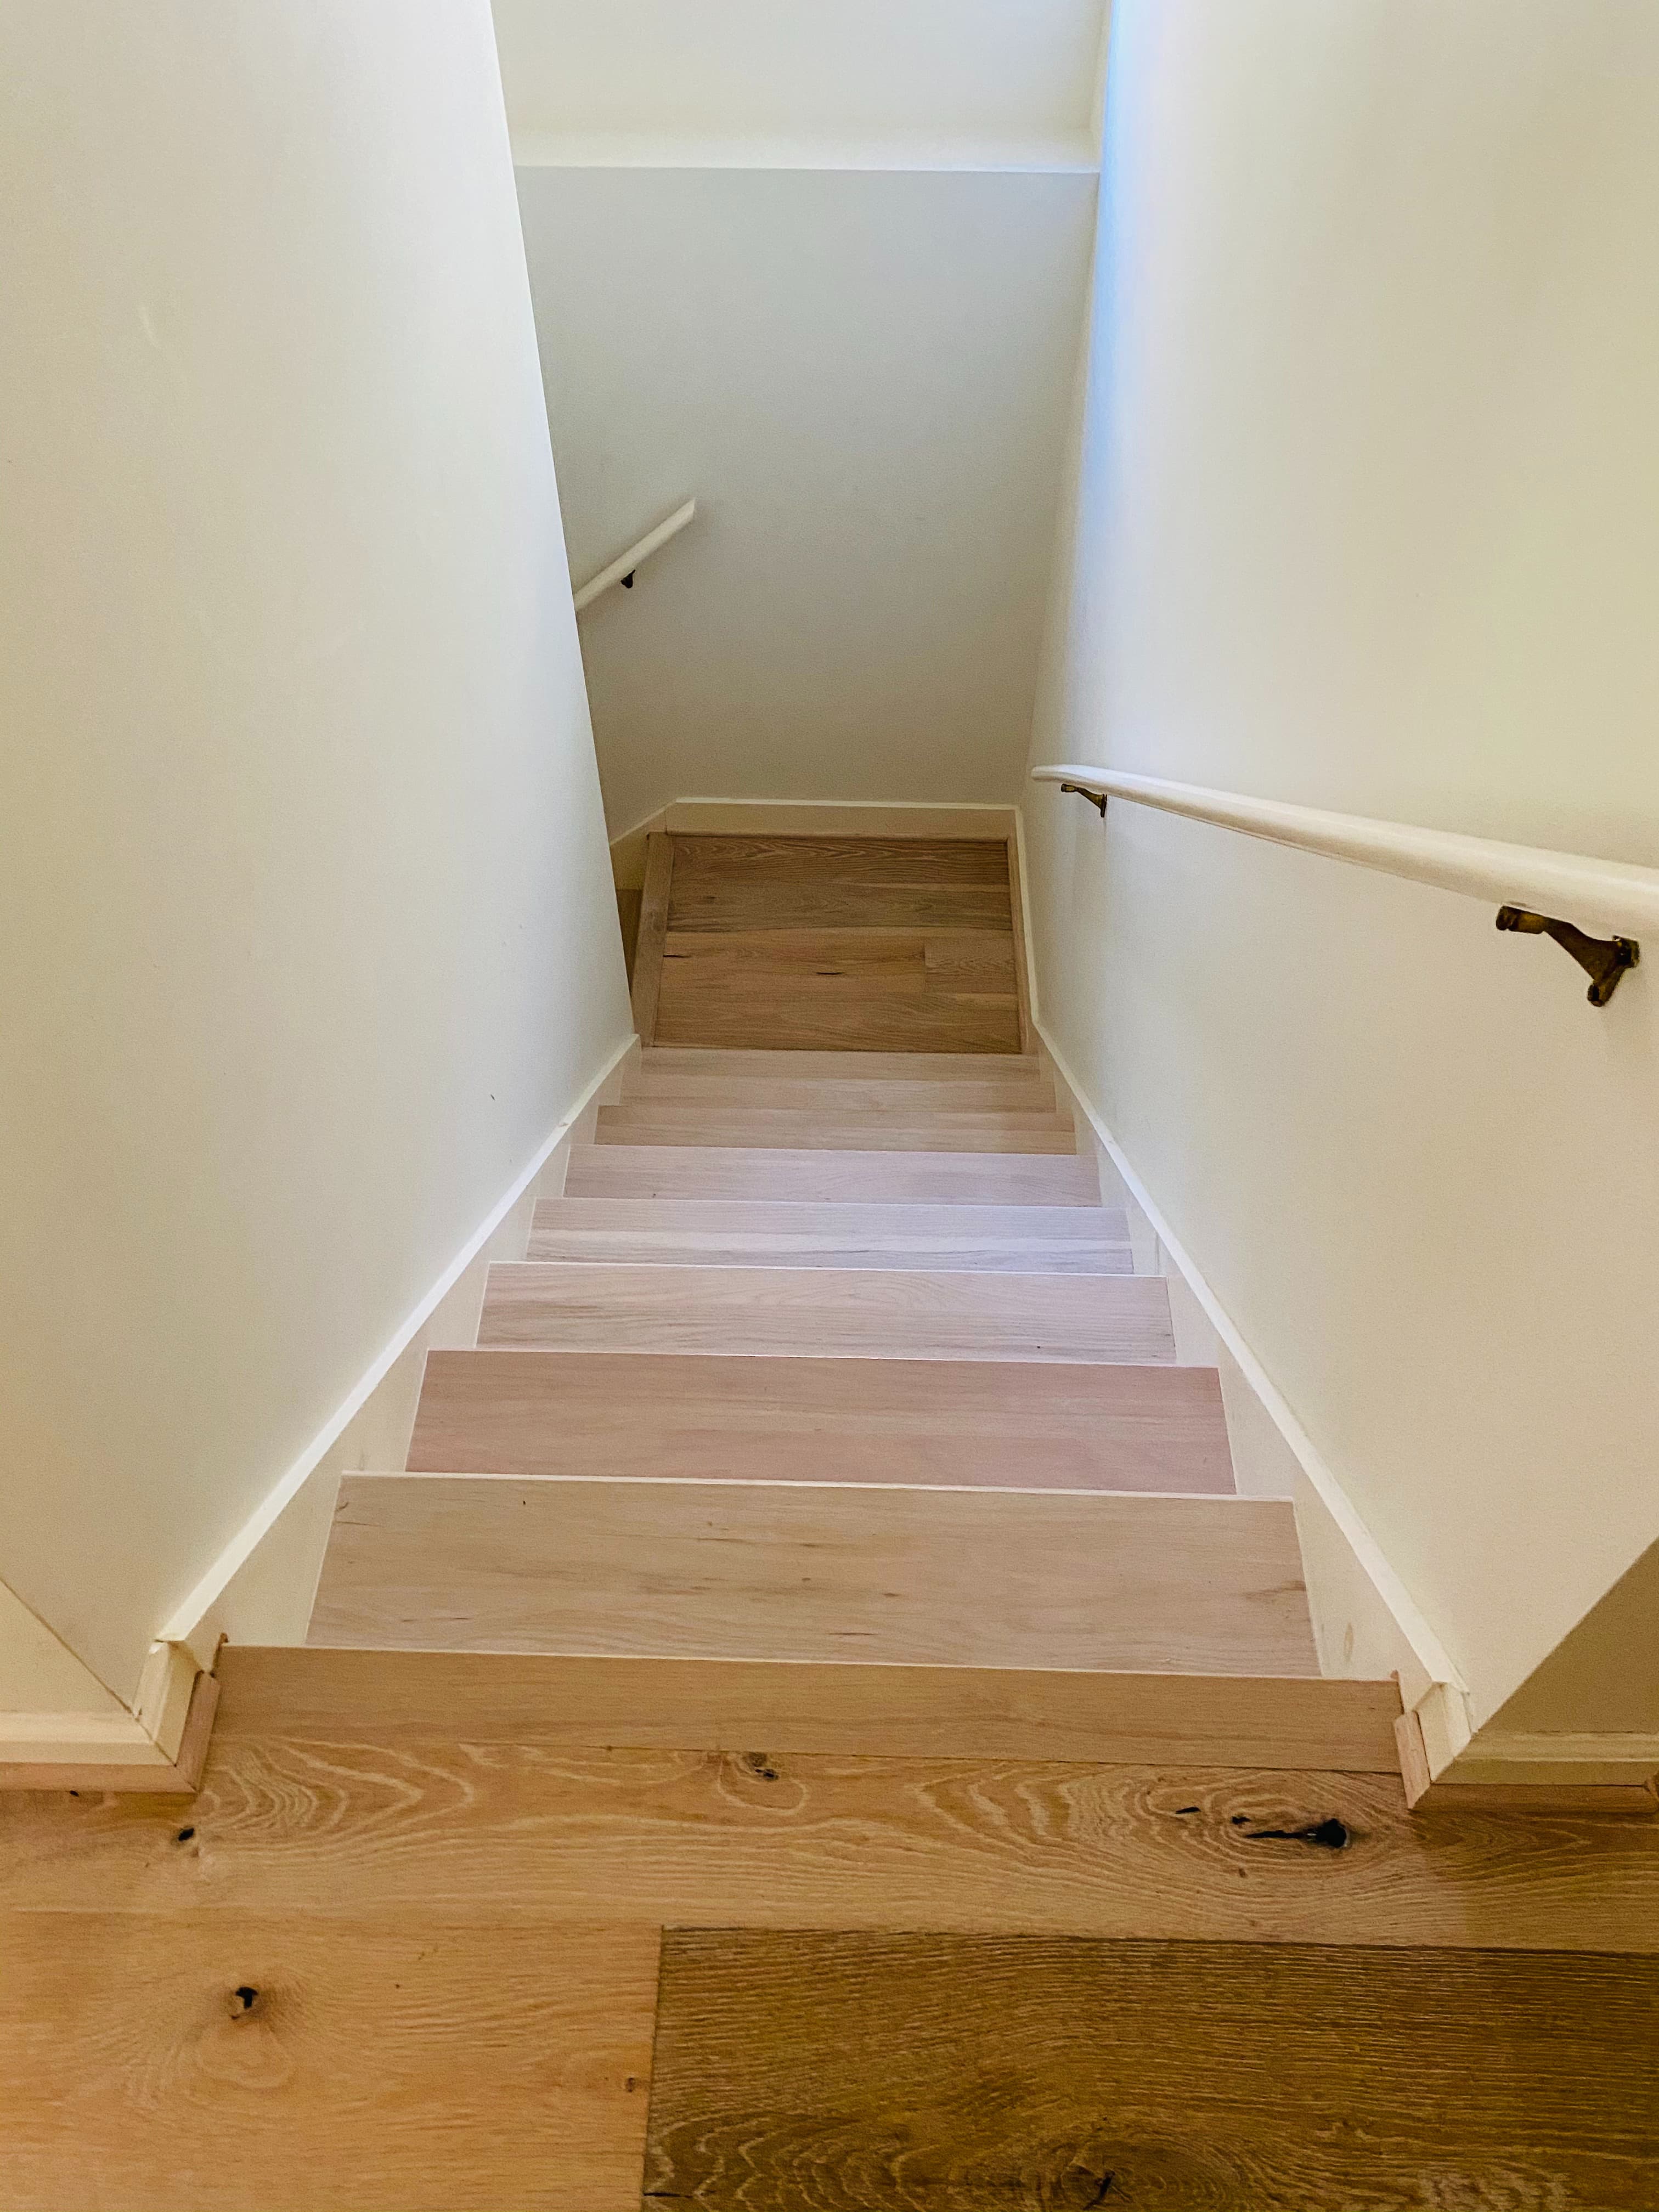 Stairs laminate flooring | Carpetland USA of Virginia